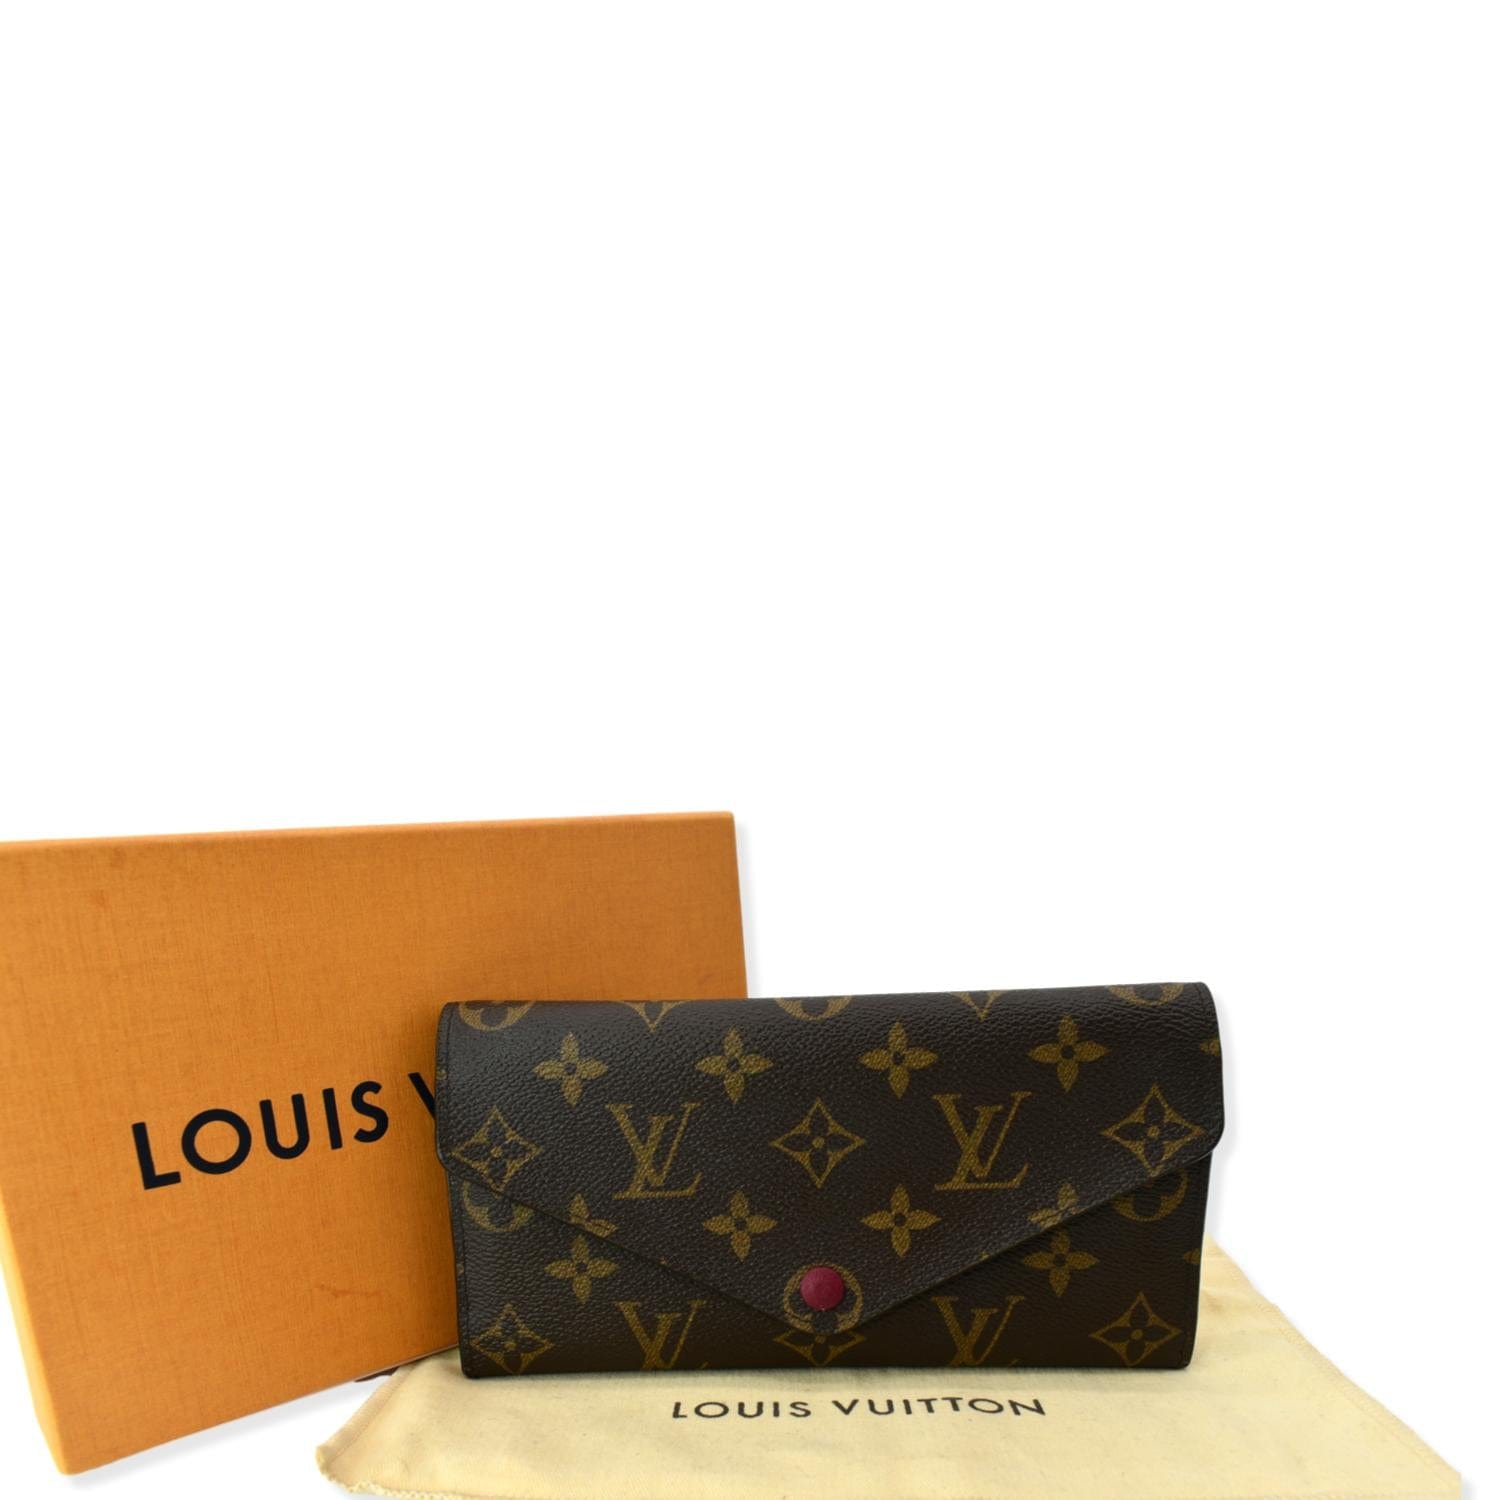 Leather, Canvas Wallets for Women - LOUIS VUITTON